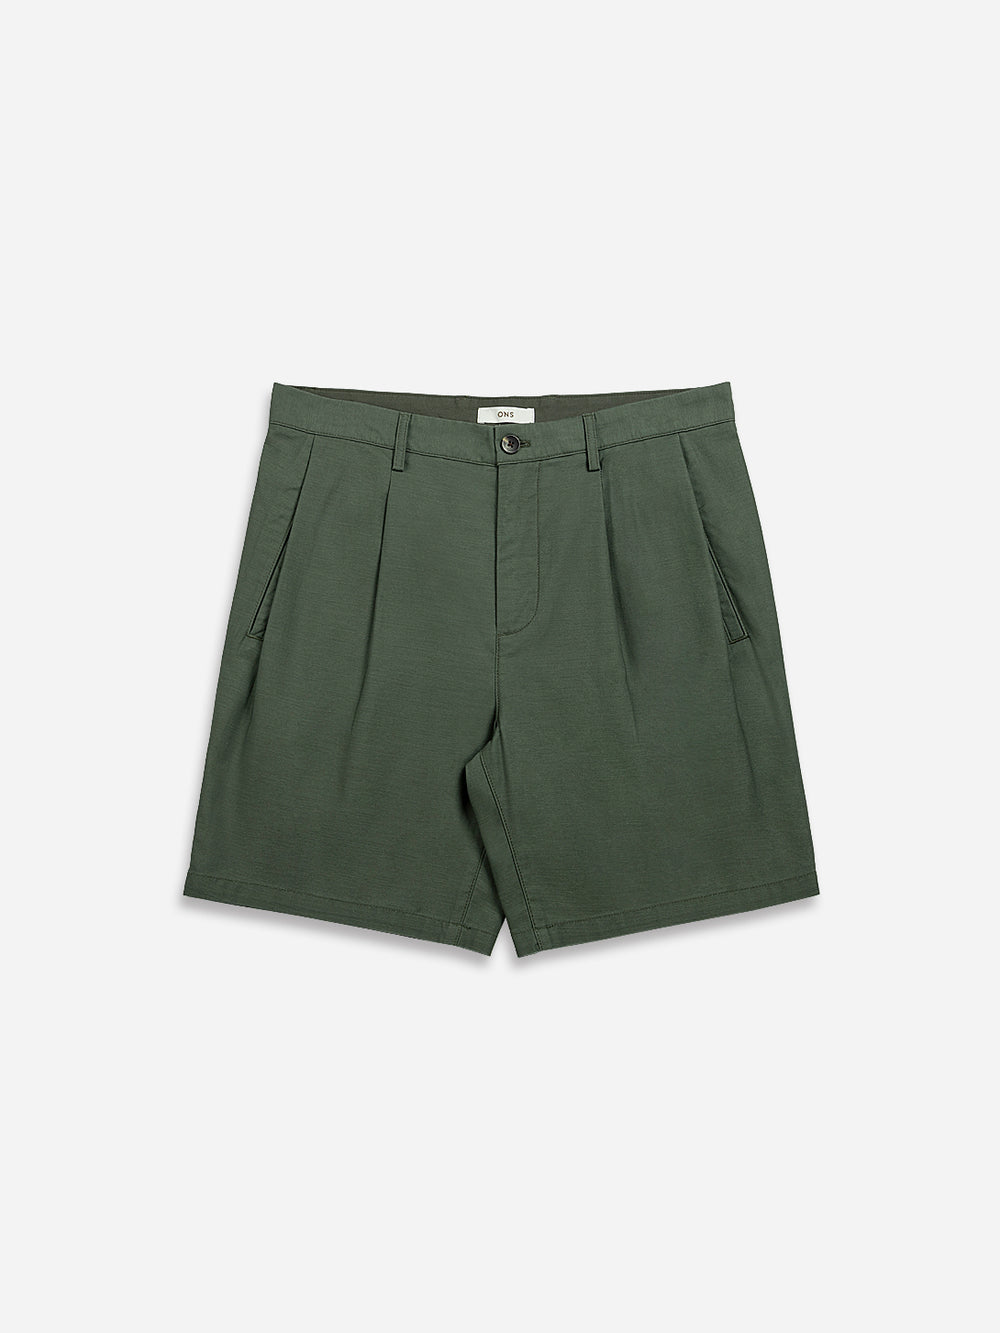 Agave Green Modern Slub Shorts Mens Pleated Lightweight 